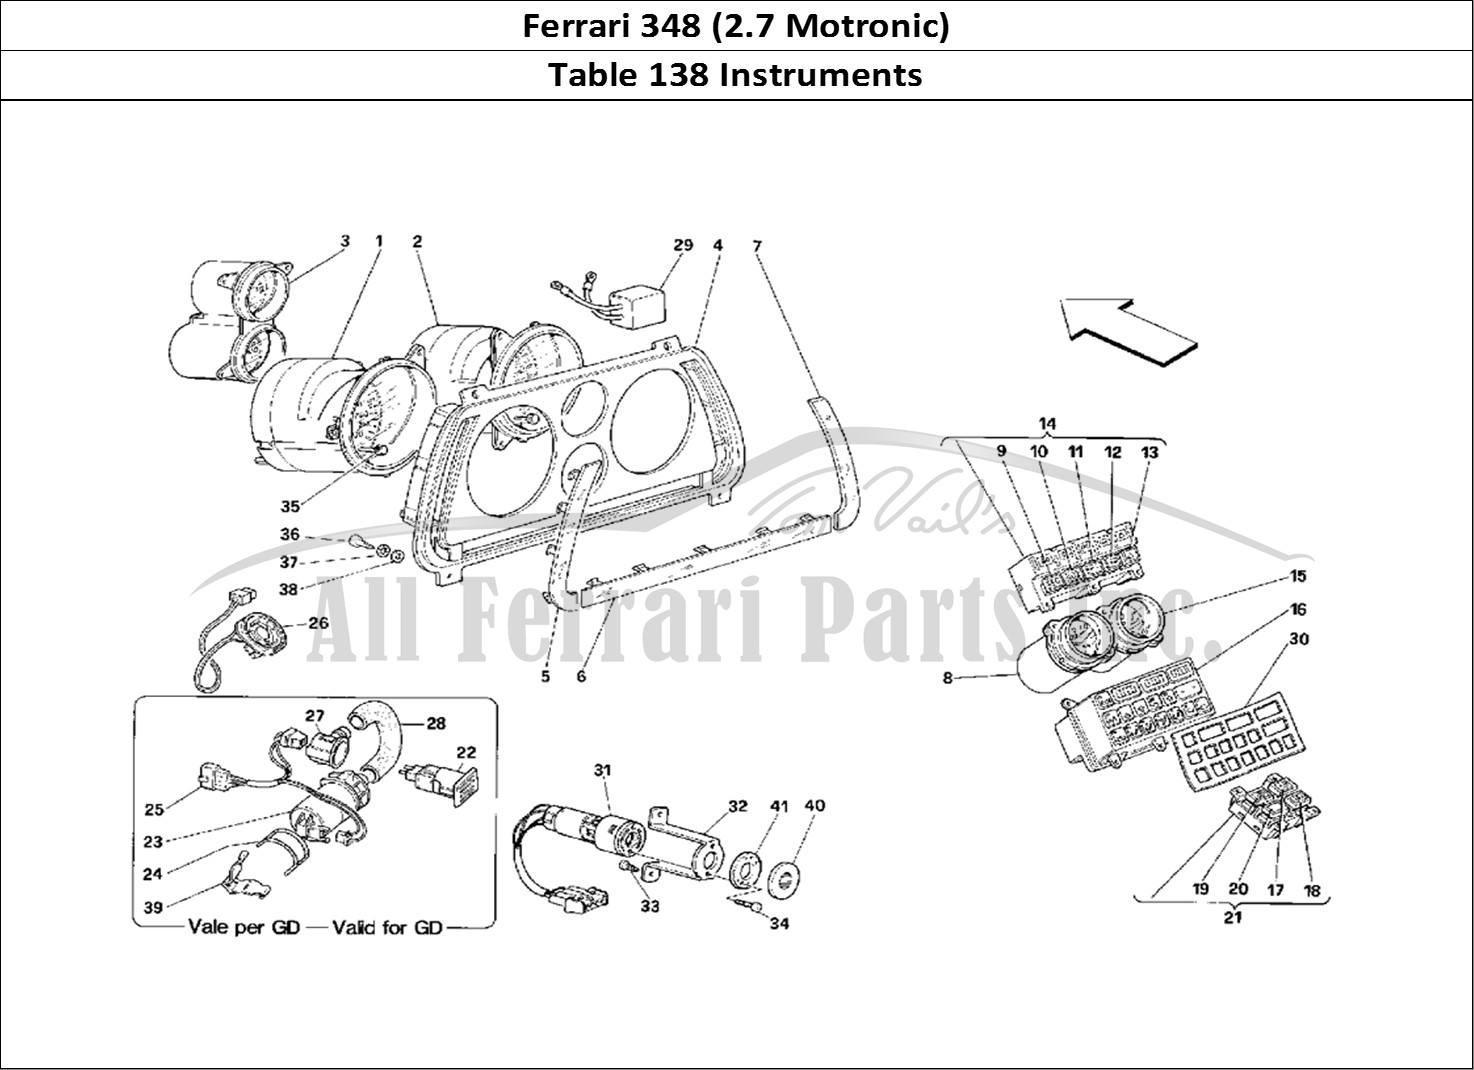 Ferrari Parts Ferrari 348 (2.7 Motronic) Page 138 Instruments